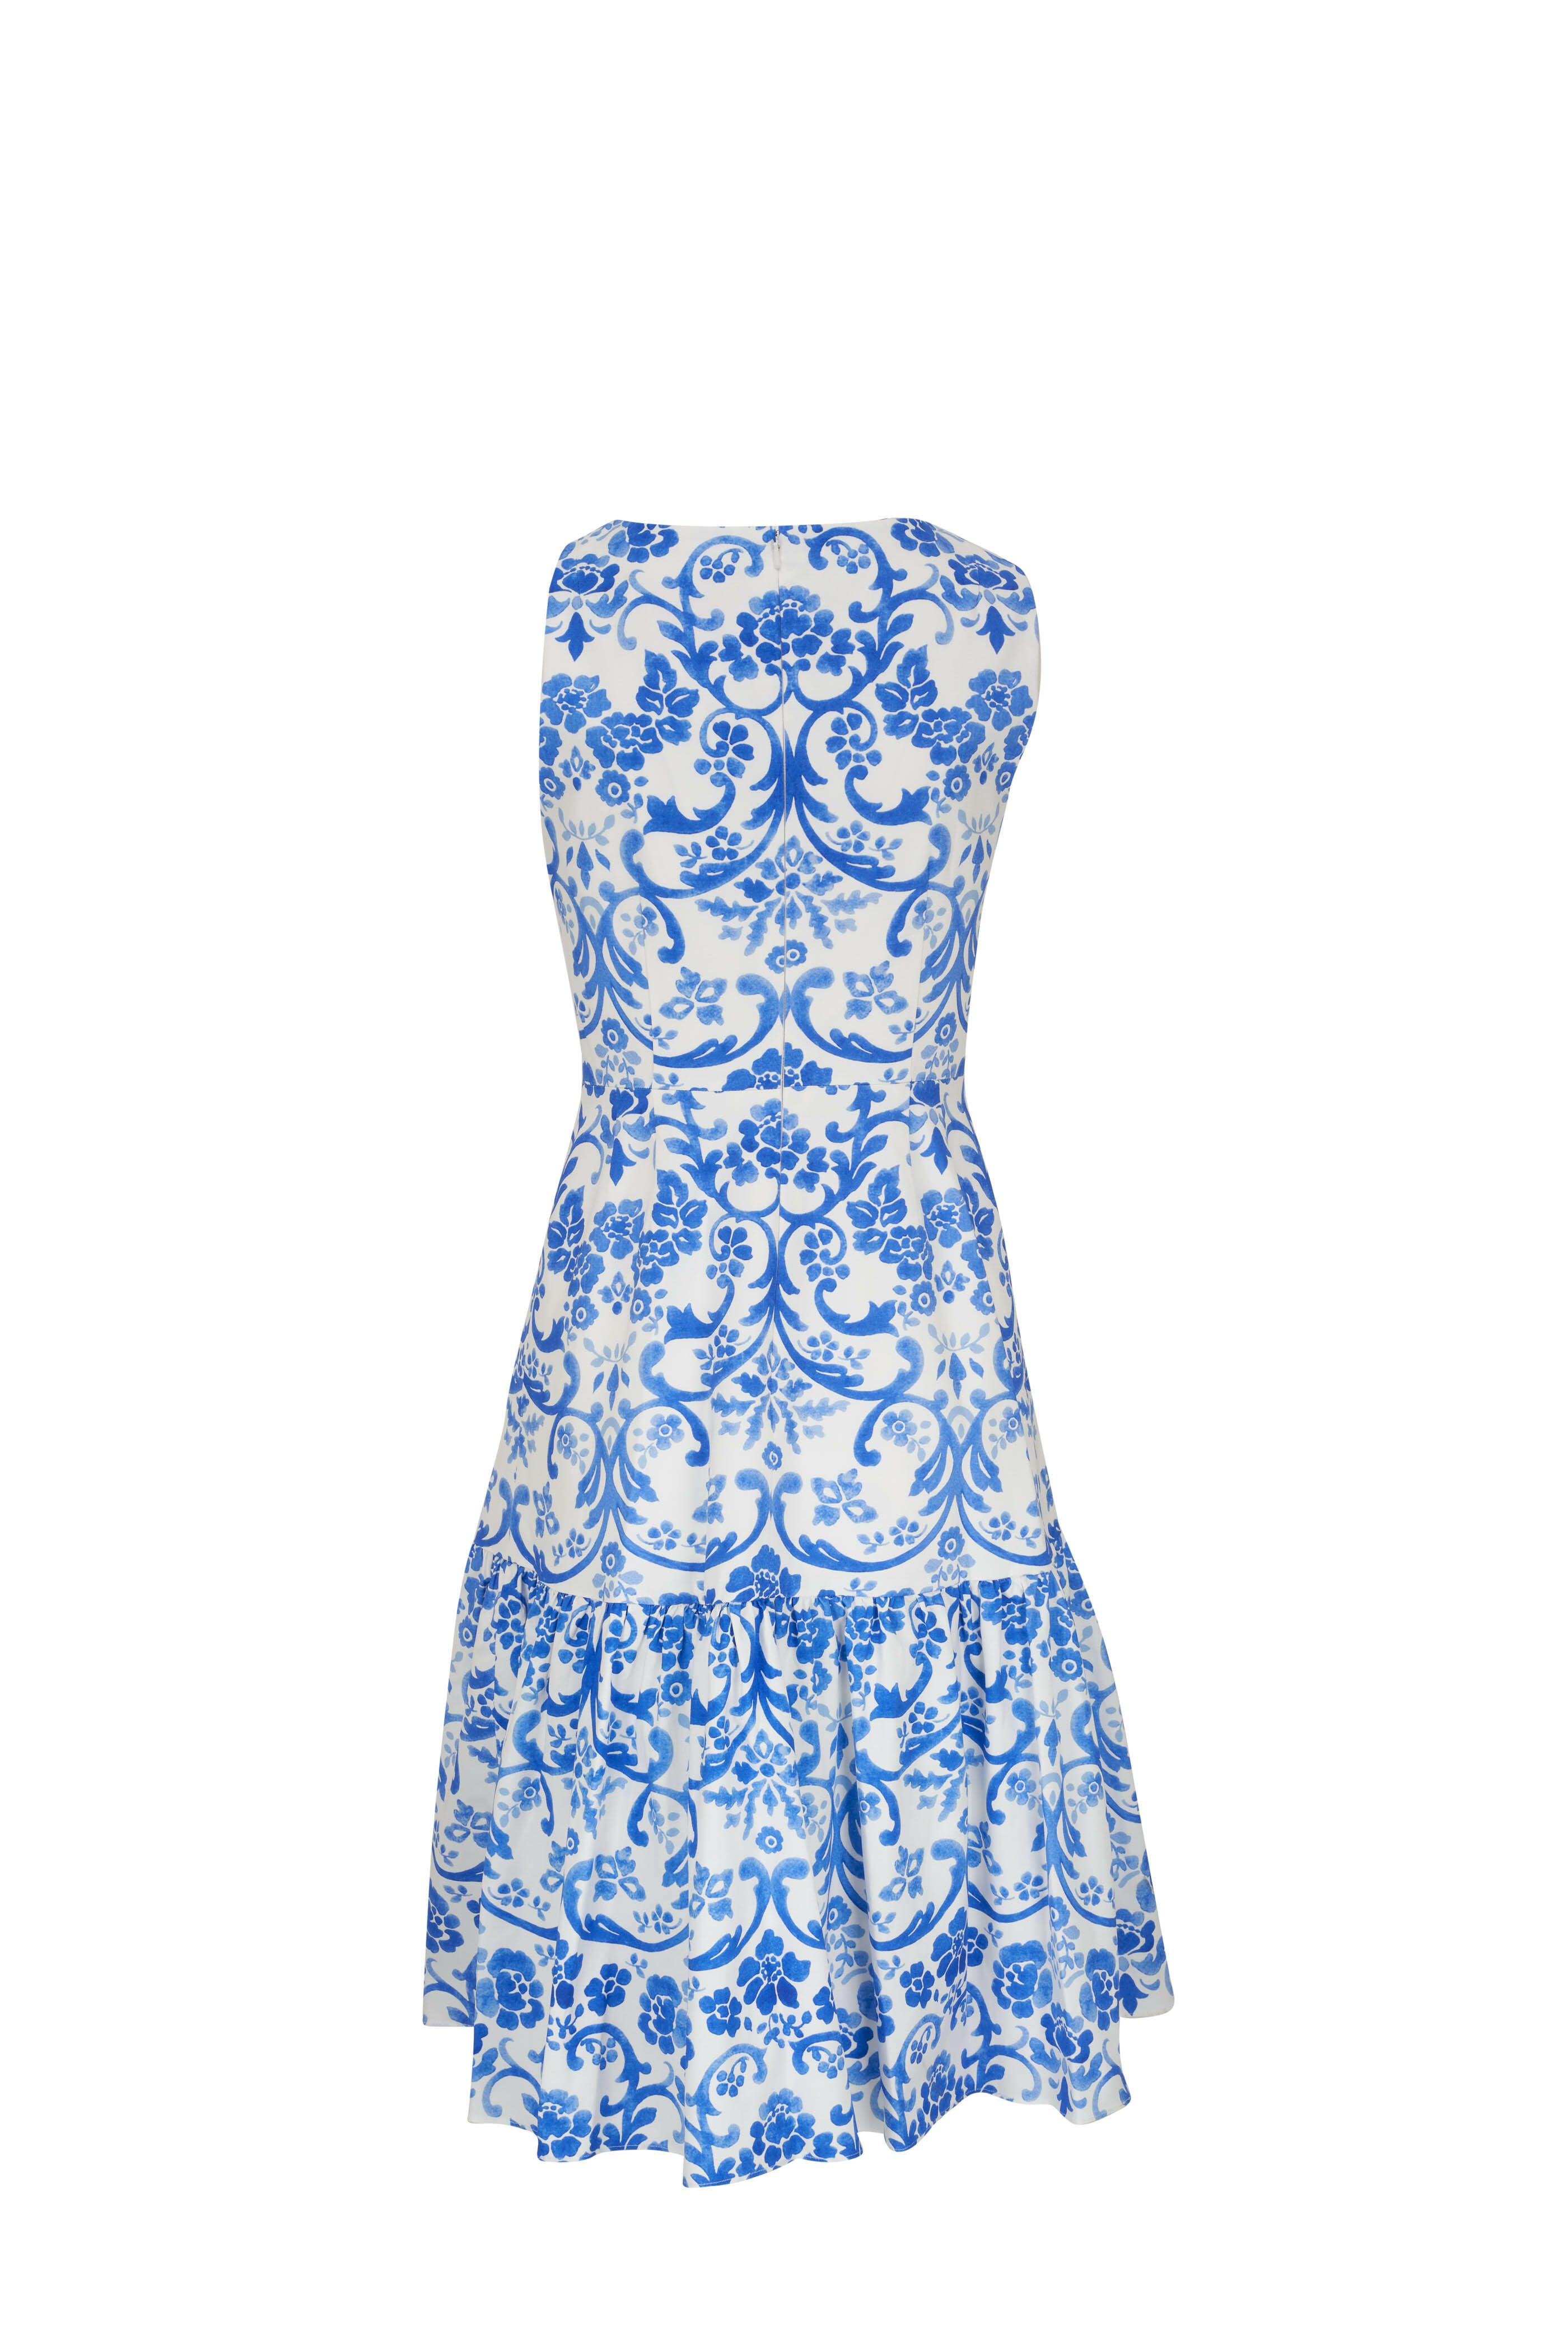 Carolina Herrera - Blue & White Floral Ruffle Hem Dress